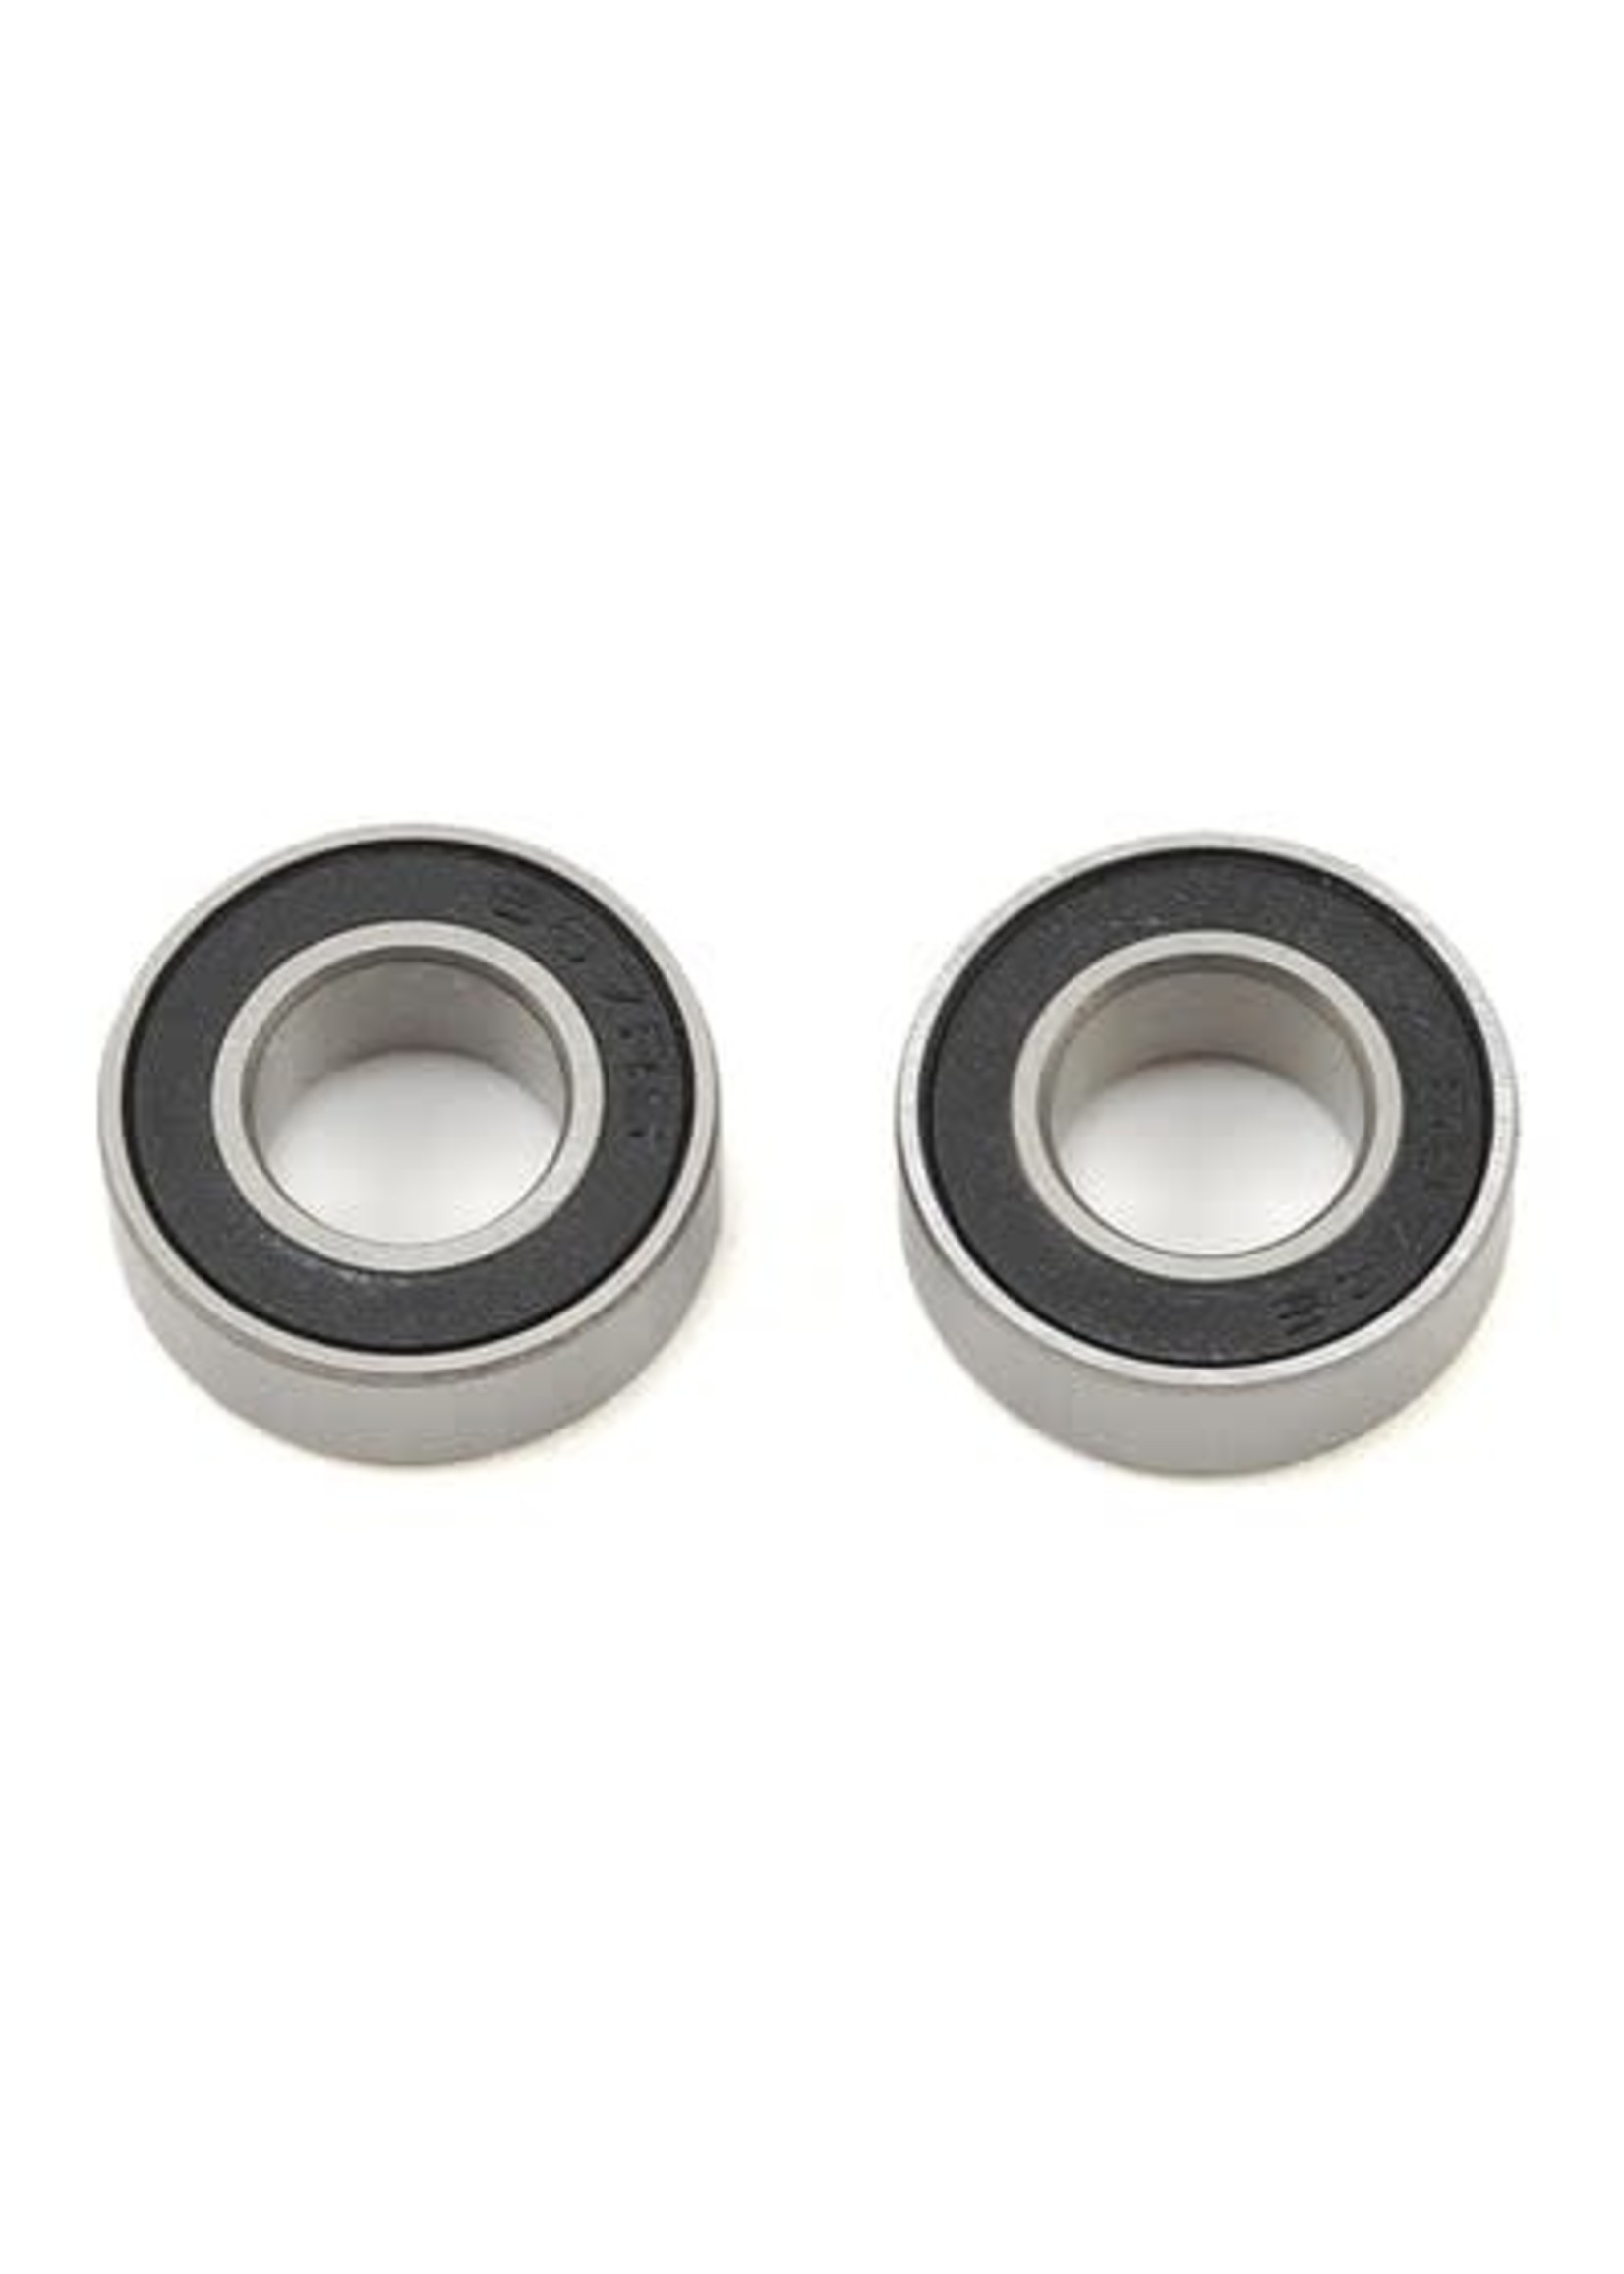 Traxxas 5103A Ball bearings, black rubber sealed (7x14x5mm) (2)